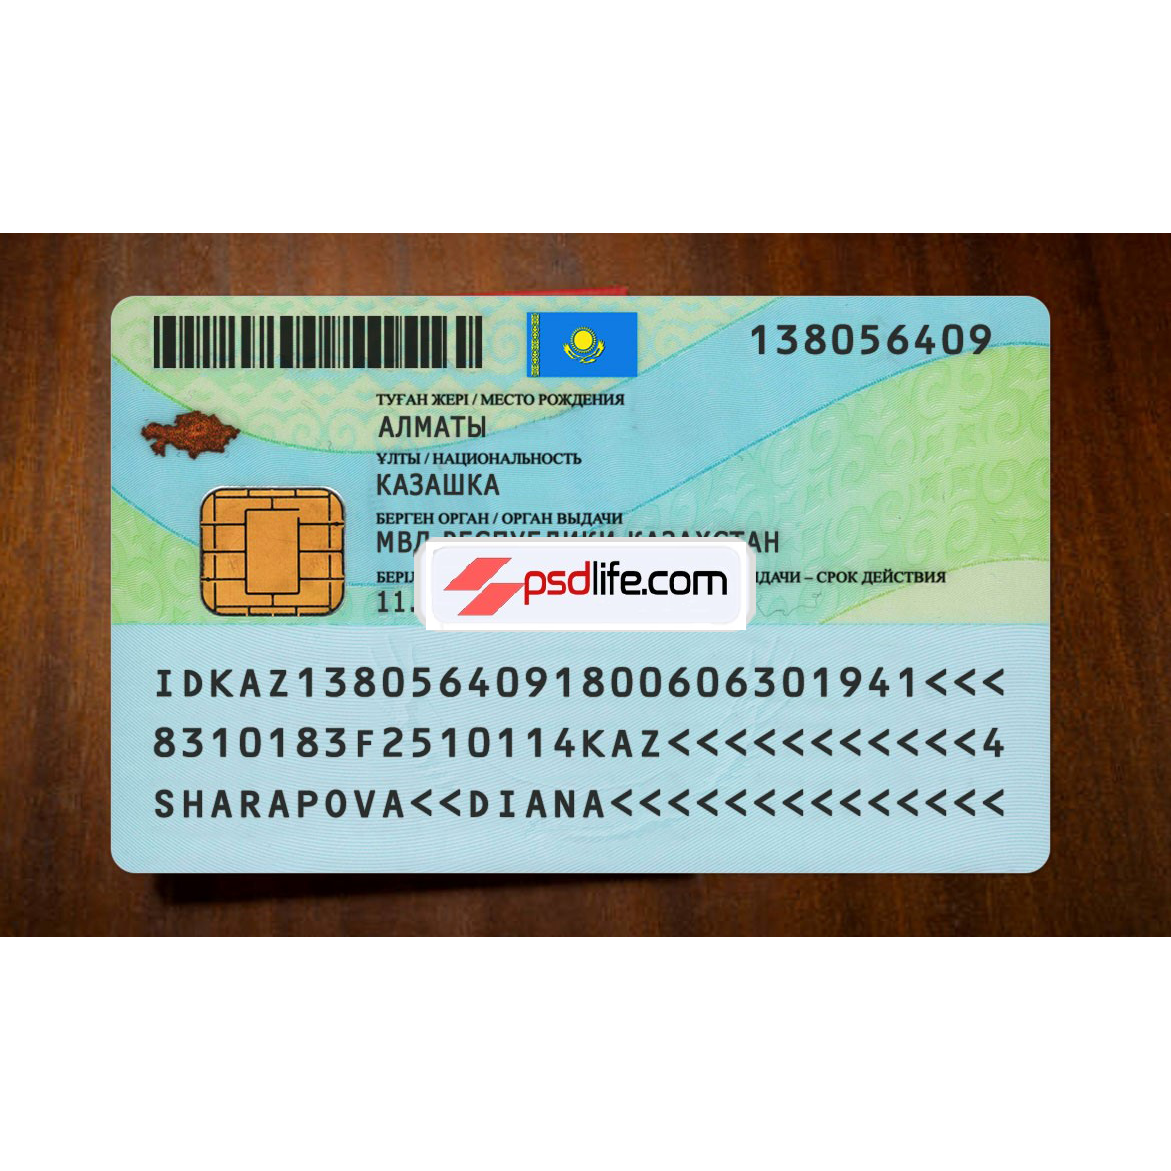 Kazakhstan id card template blank and editable with all font | Id card psd Template free download | ID Card Number Kazakhstan | Қазақстандық идентификациялық картаның жалған PSD шаблоны өңделетін тегін жүктеп алу